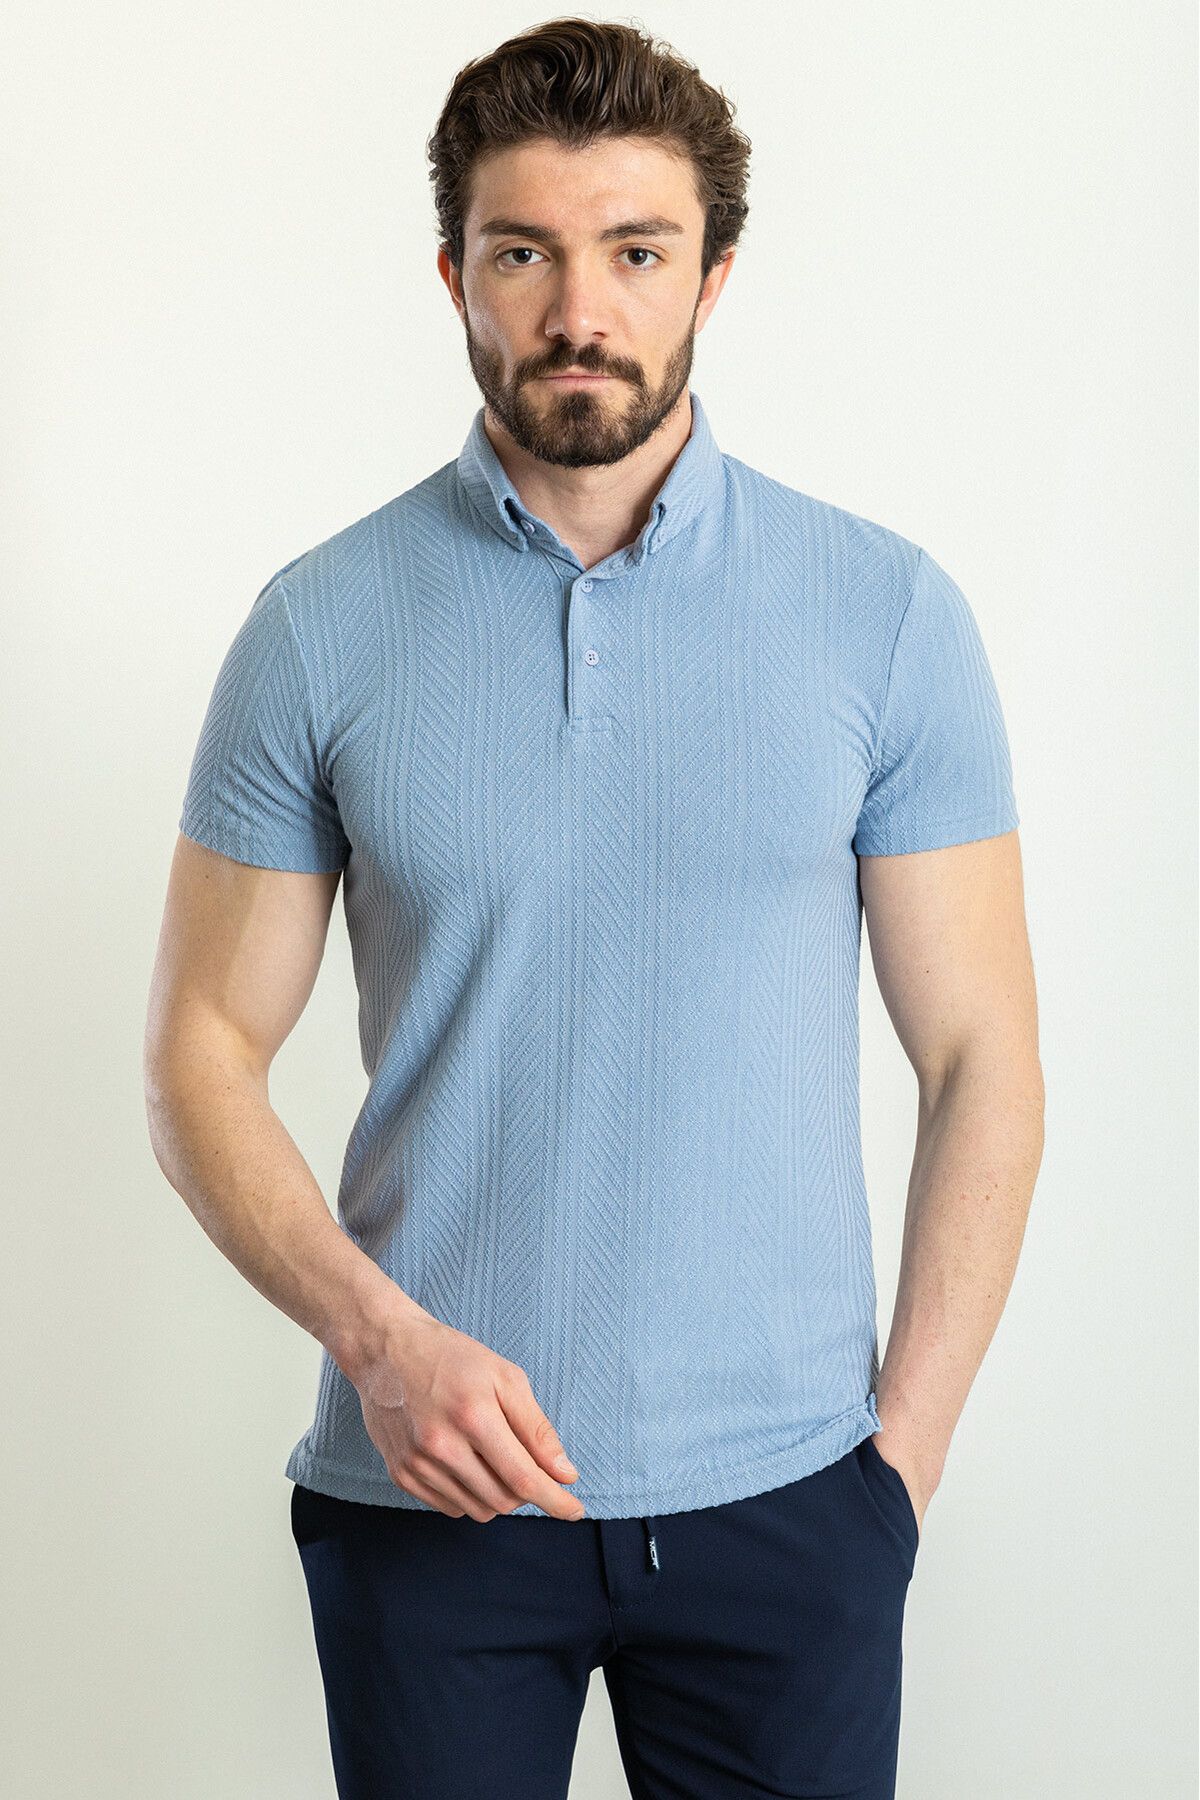 Mcr Çizgi Desenli Mavi Renk Slim Fit Polo Yaka Erkek T-shirt